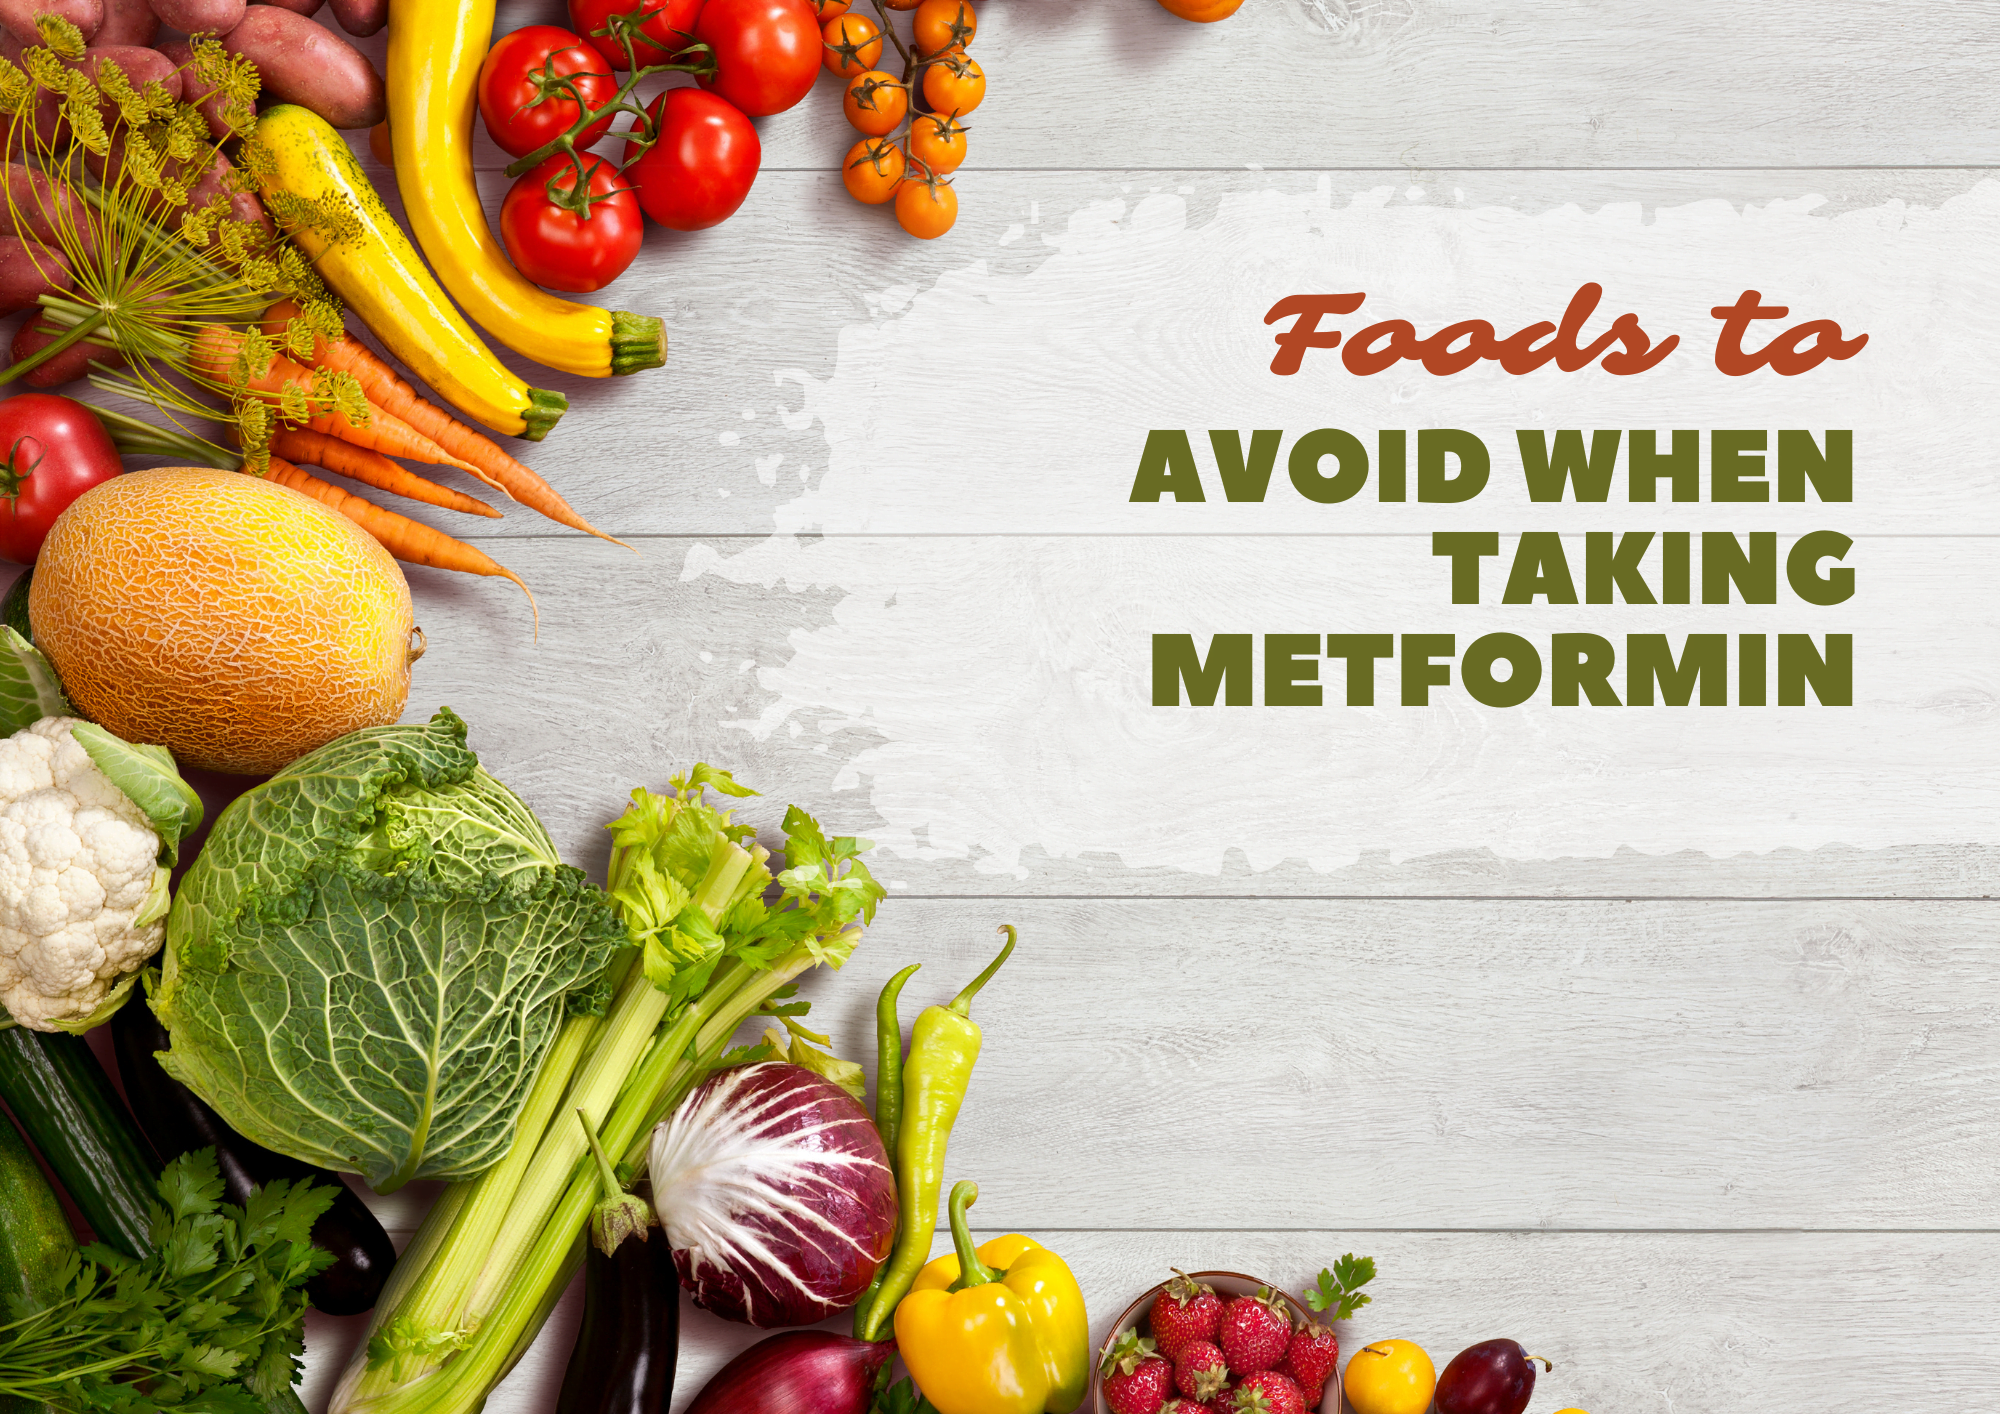 Foods that cause diarrhea with metformin